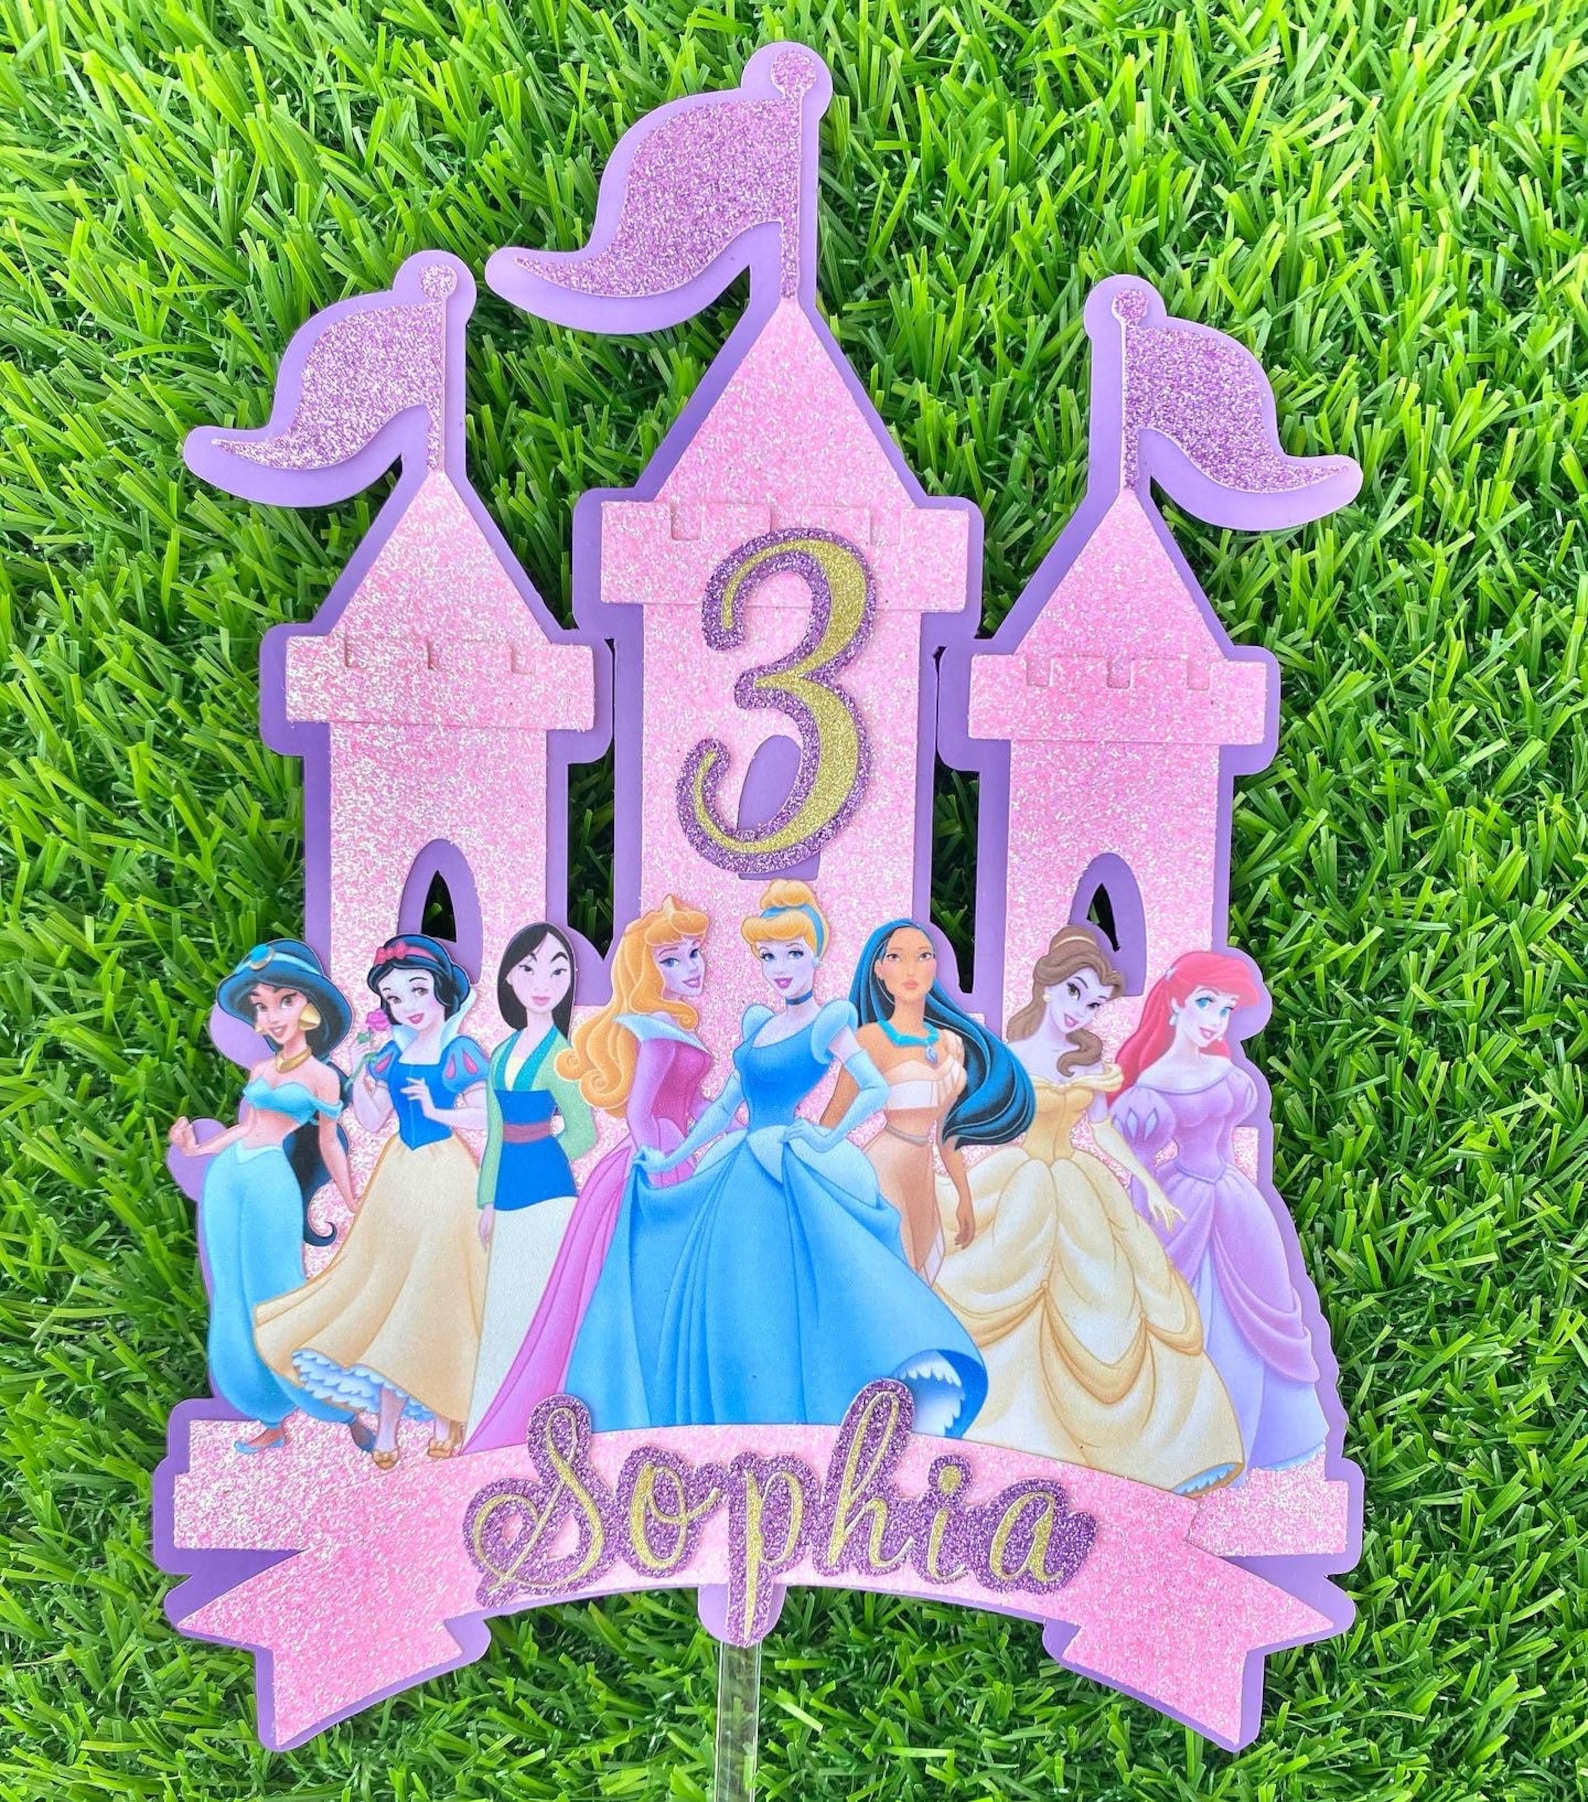 Disney Princess Cake Topper Printable